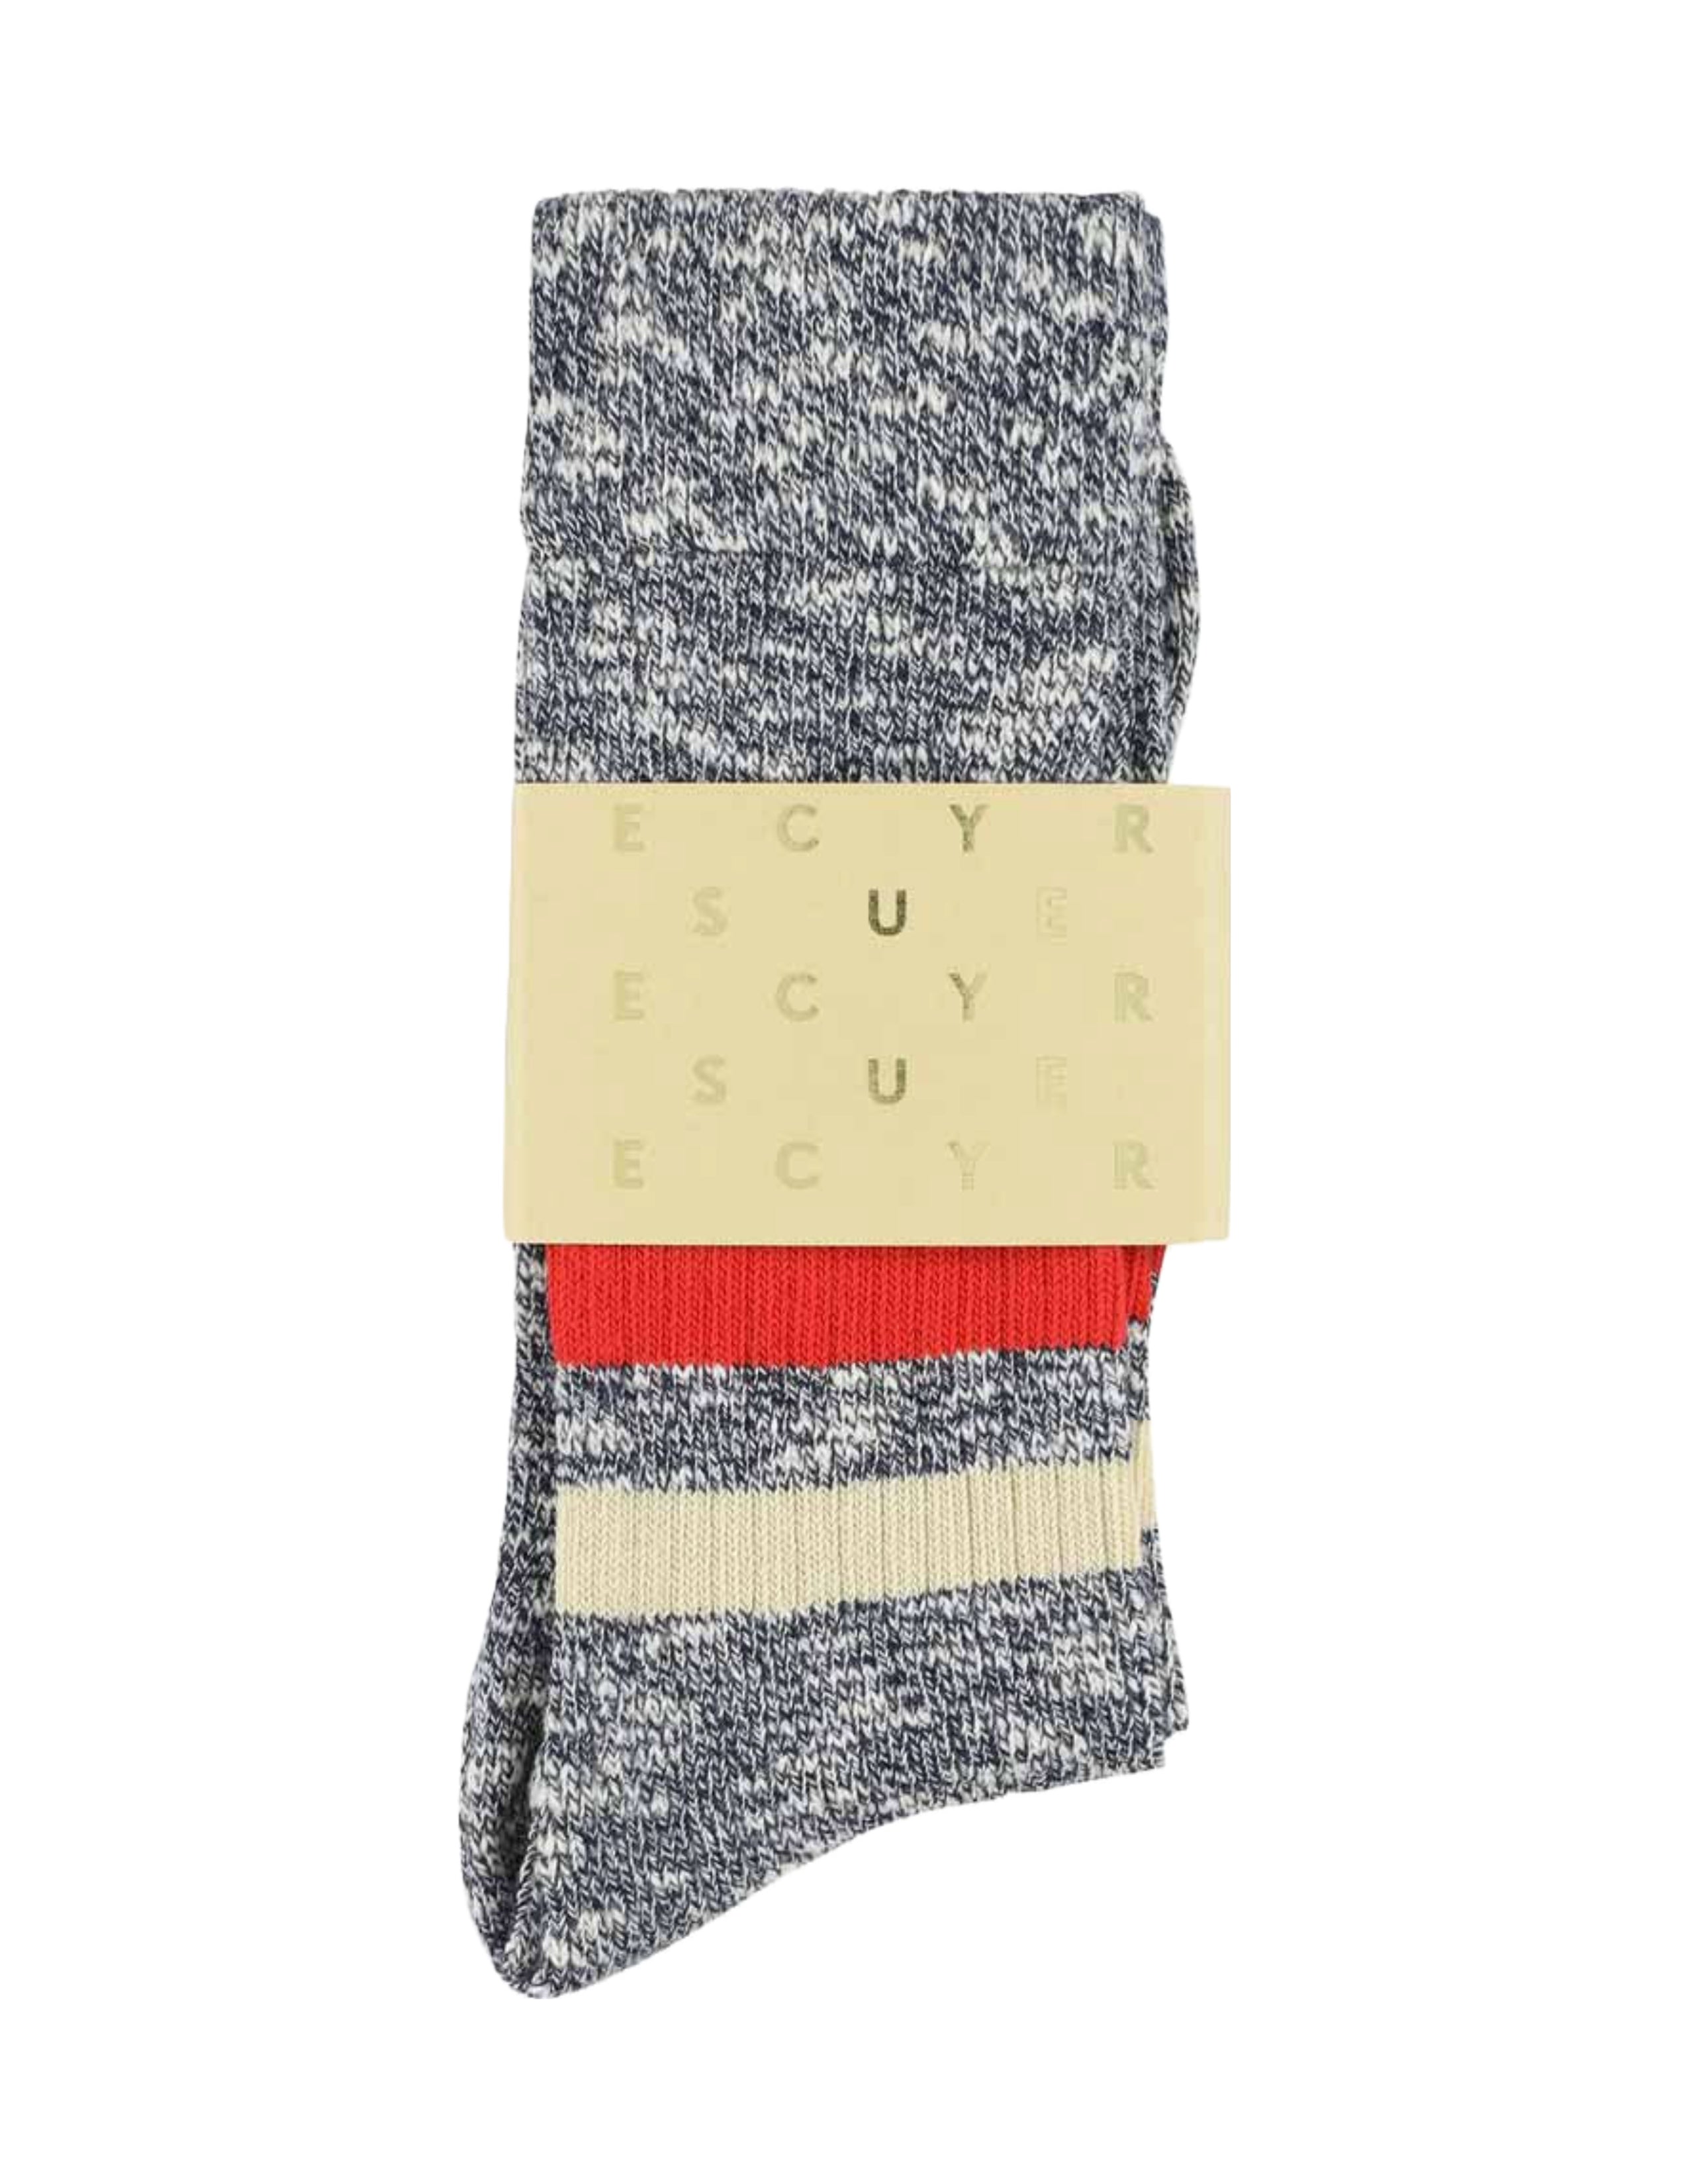 Melange Stripe Socks - Navy/Orange/Ecru